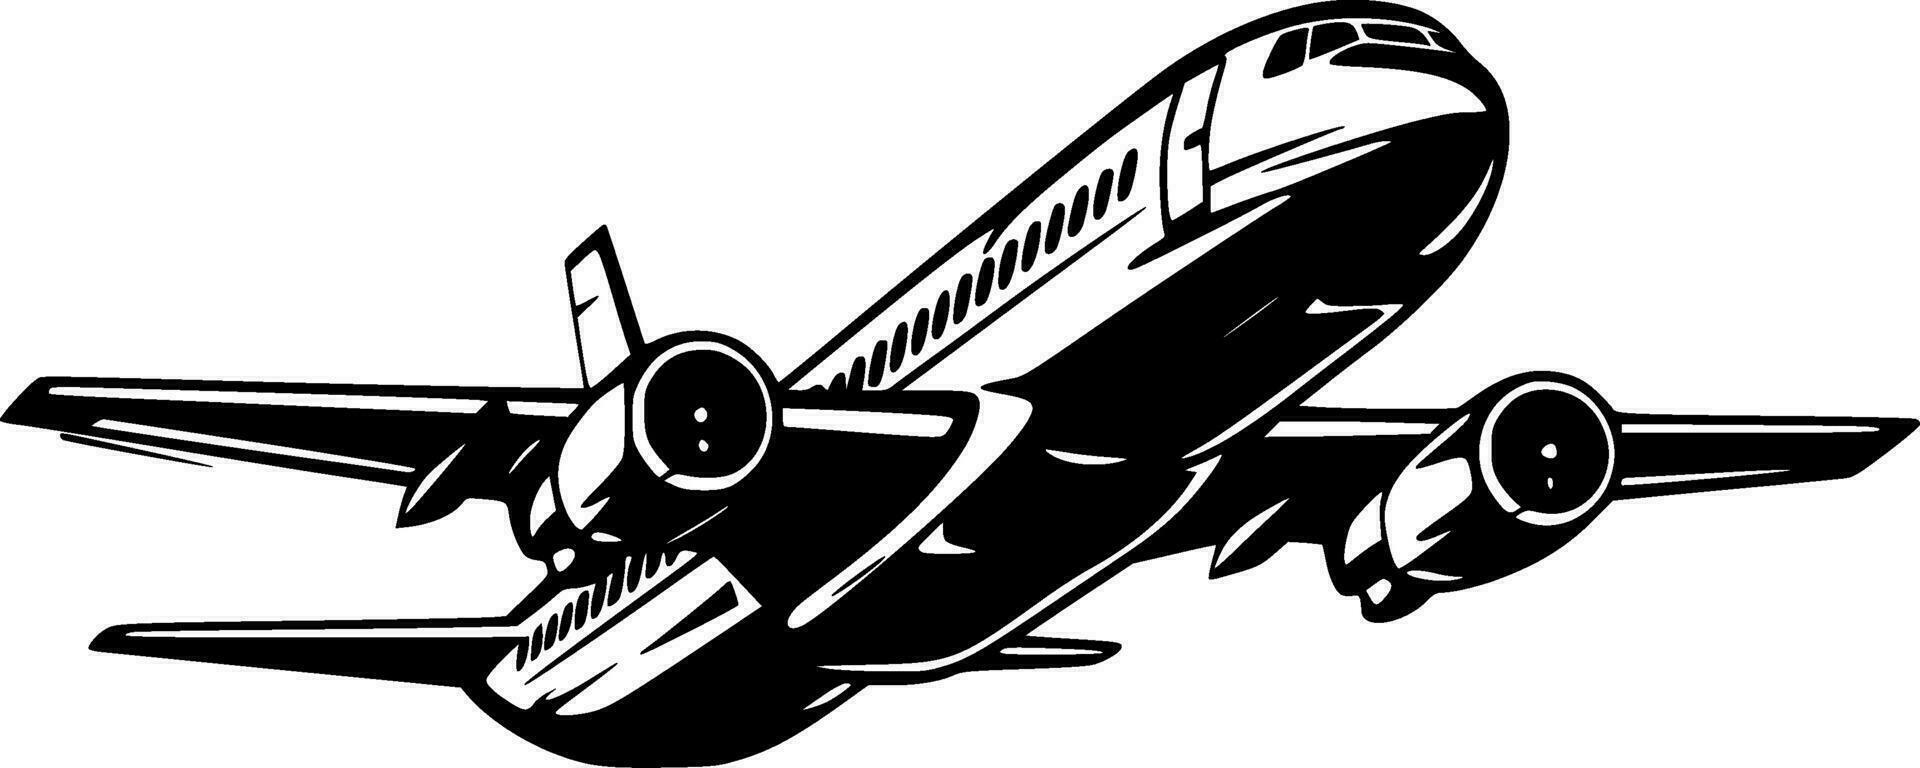 Plane, Minimalist and Simple Silhouette - Vector illustration